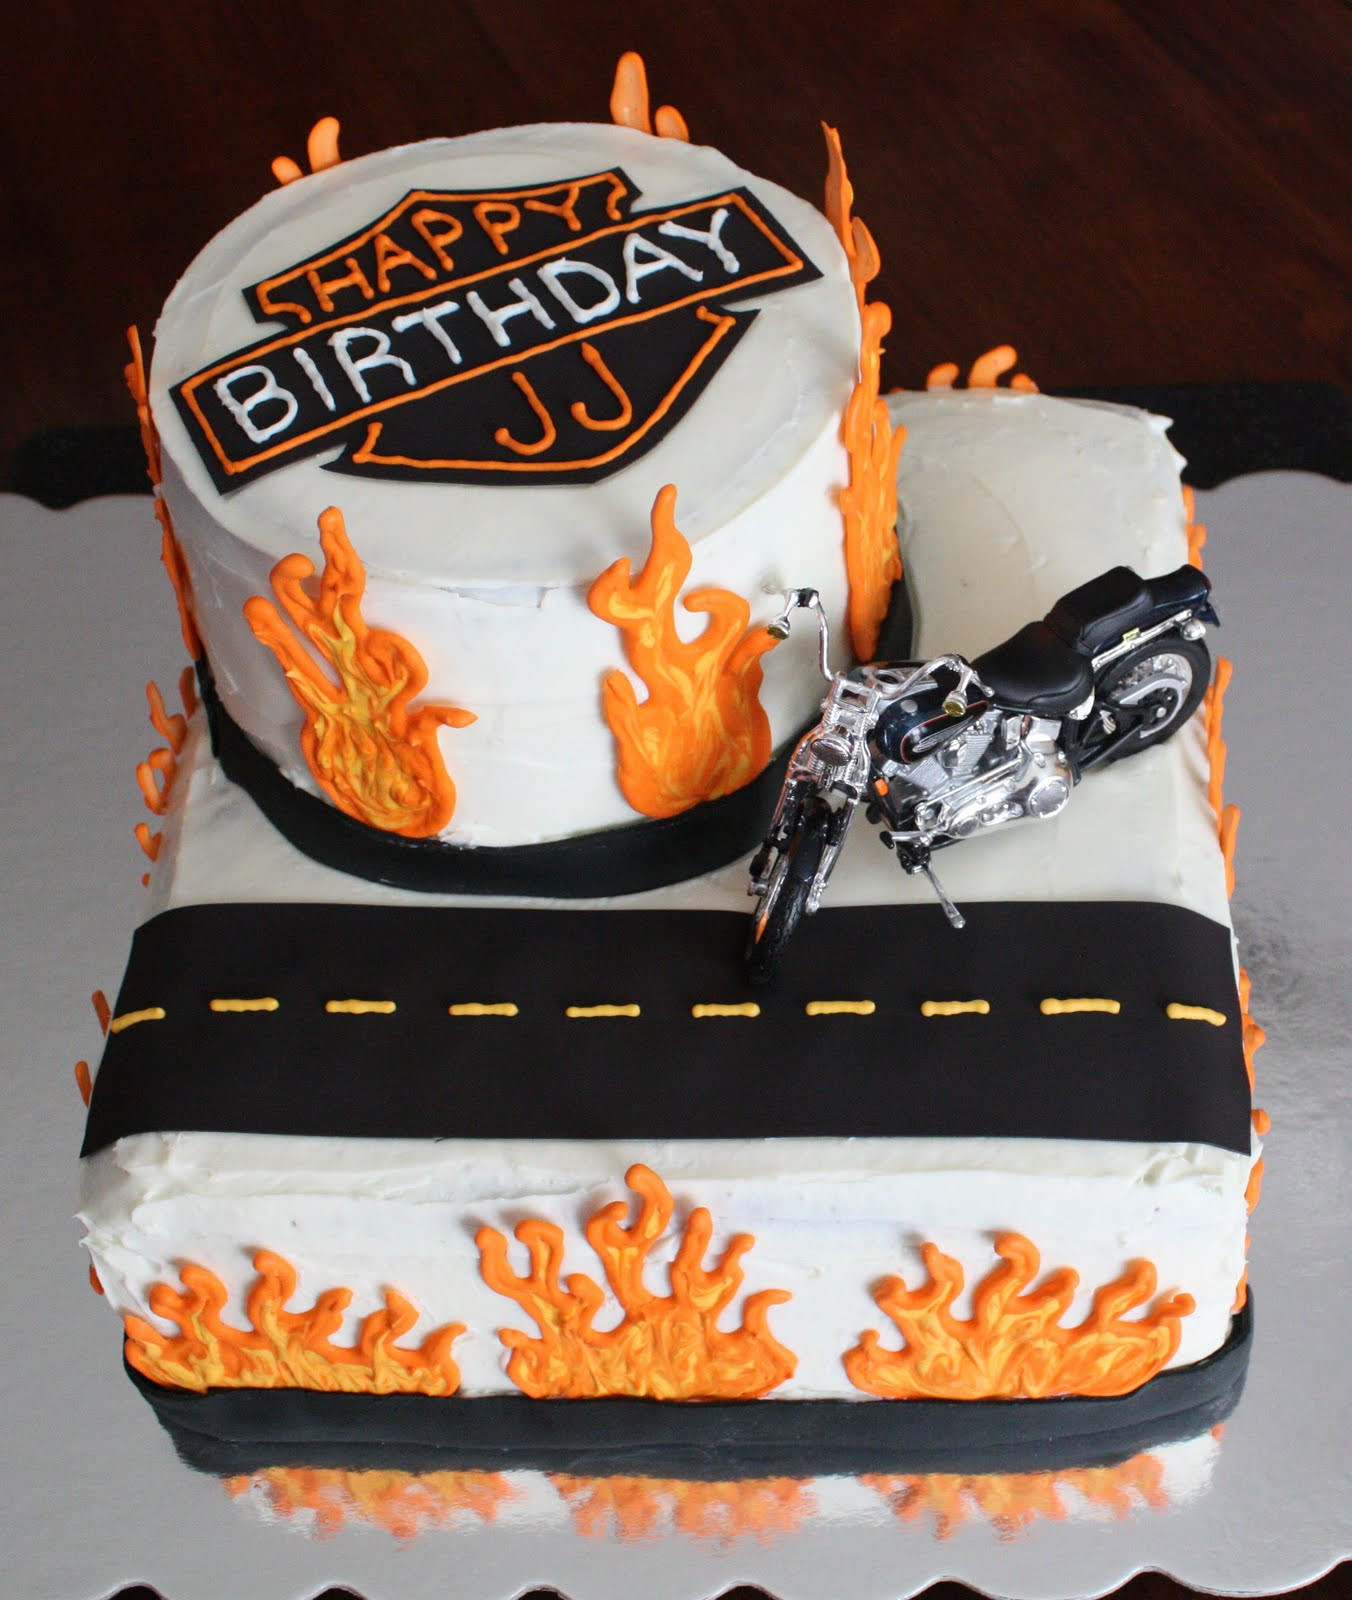 Harley Davidson Birthday Cakes
 Straight to Cake Harley Davidson Cake